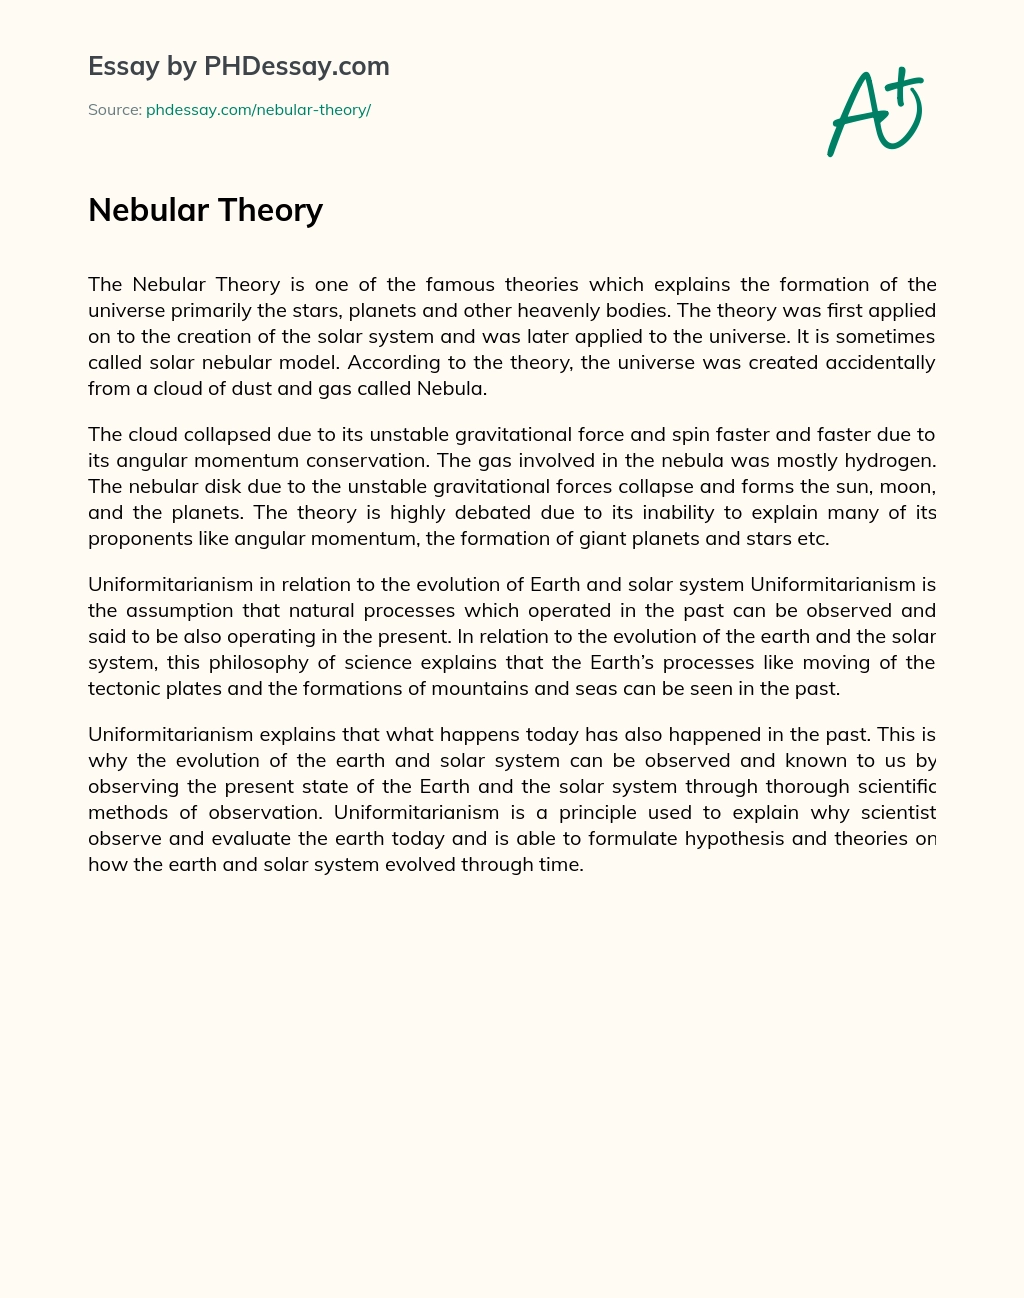 Nebular Theory essay